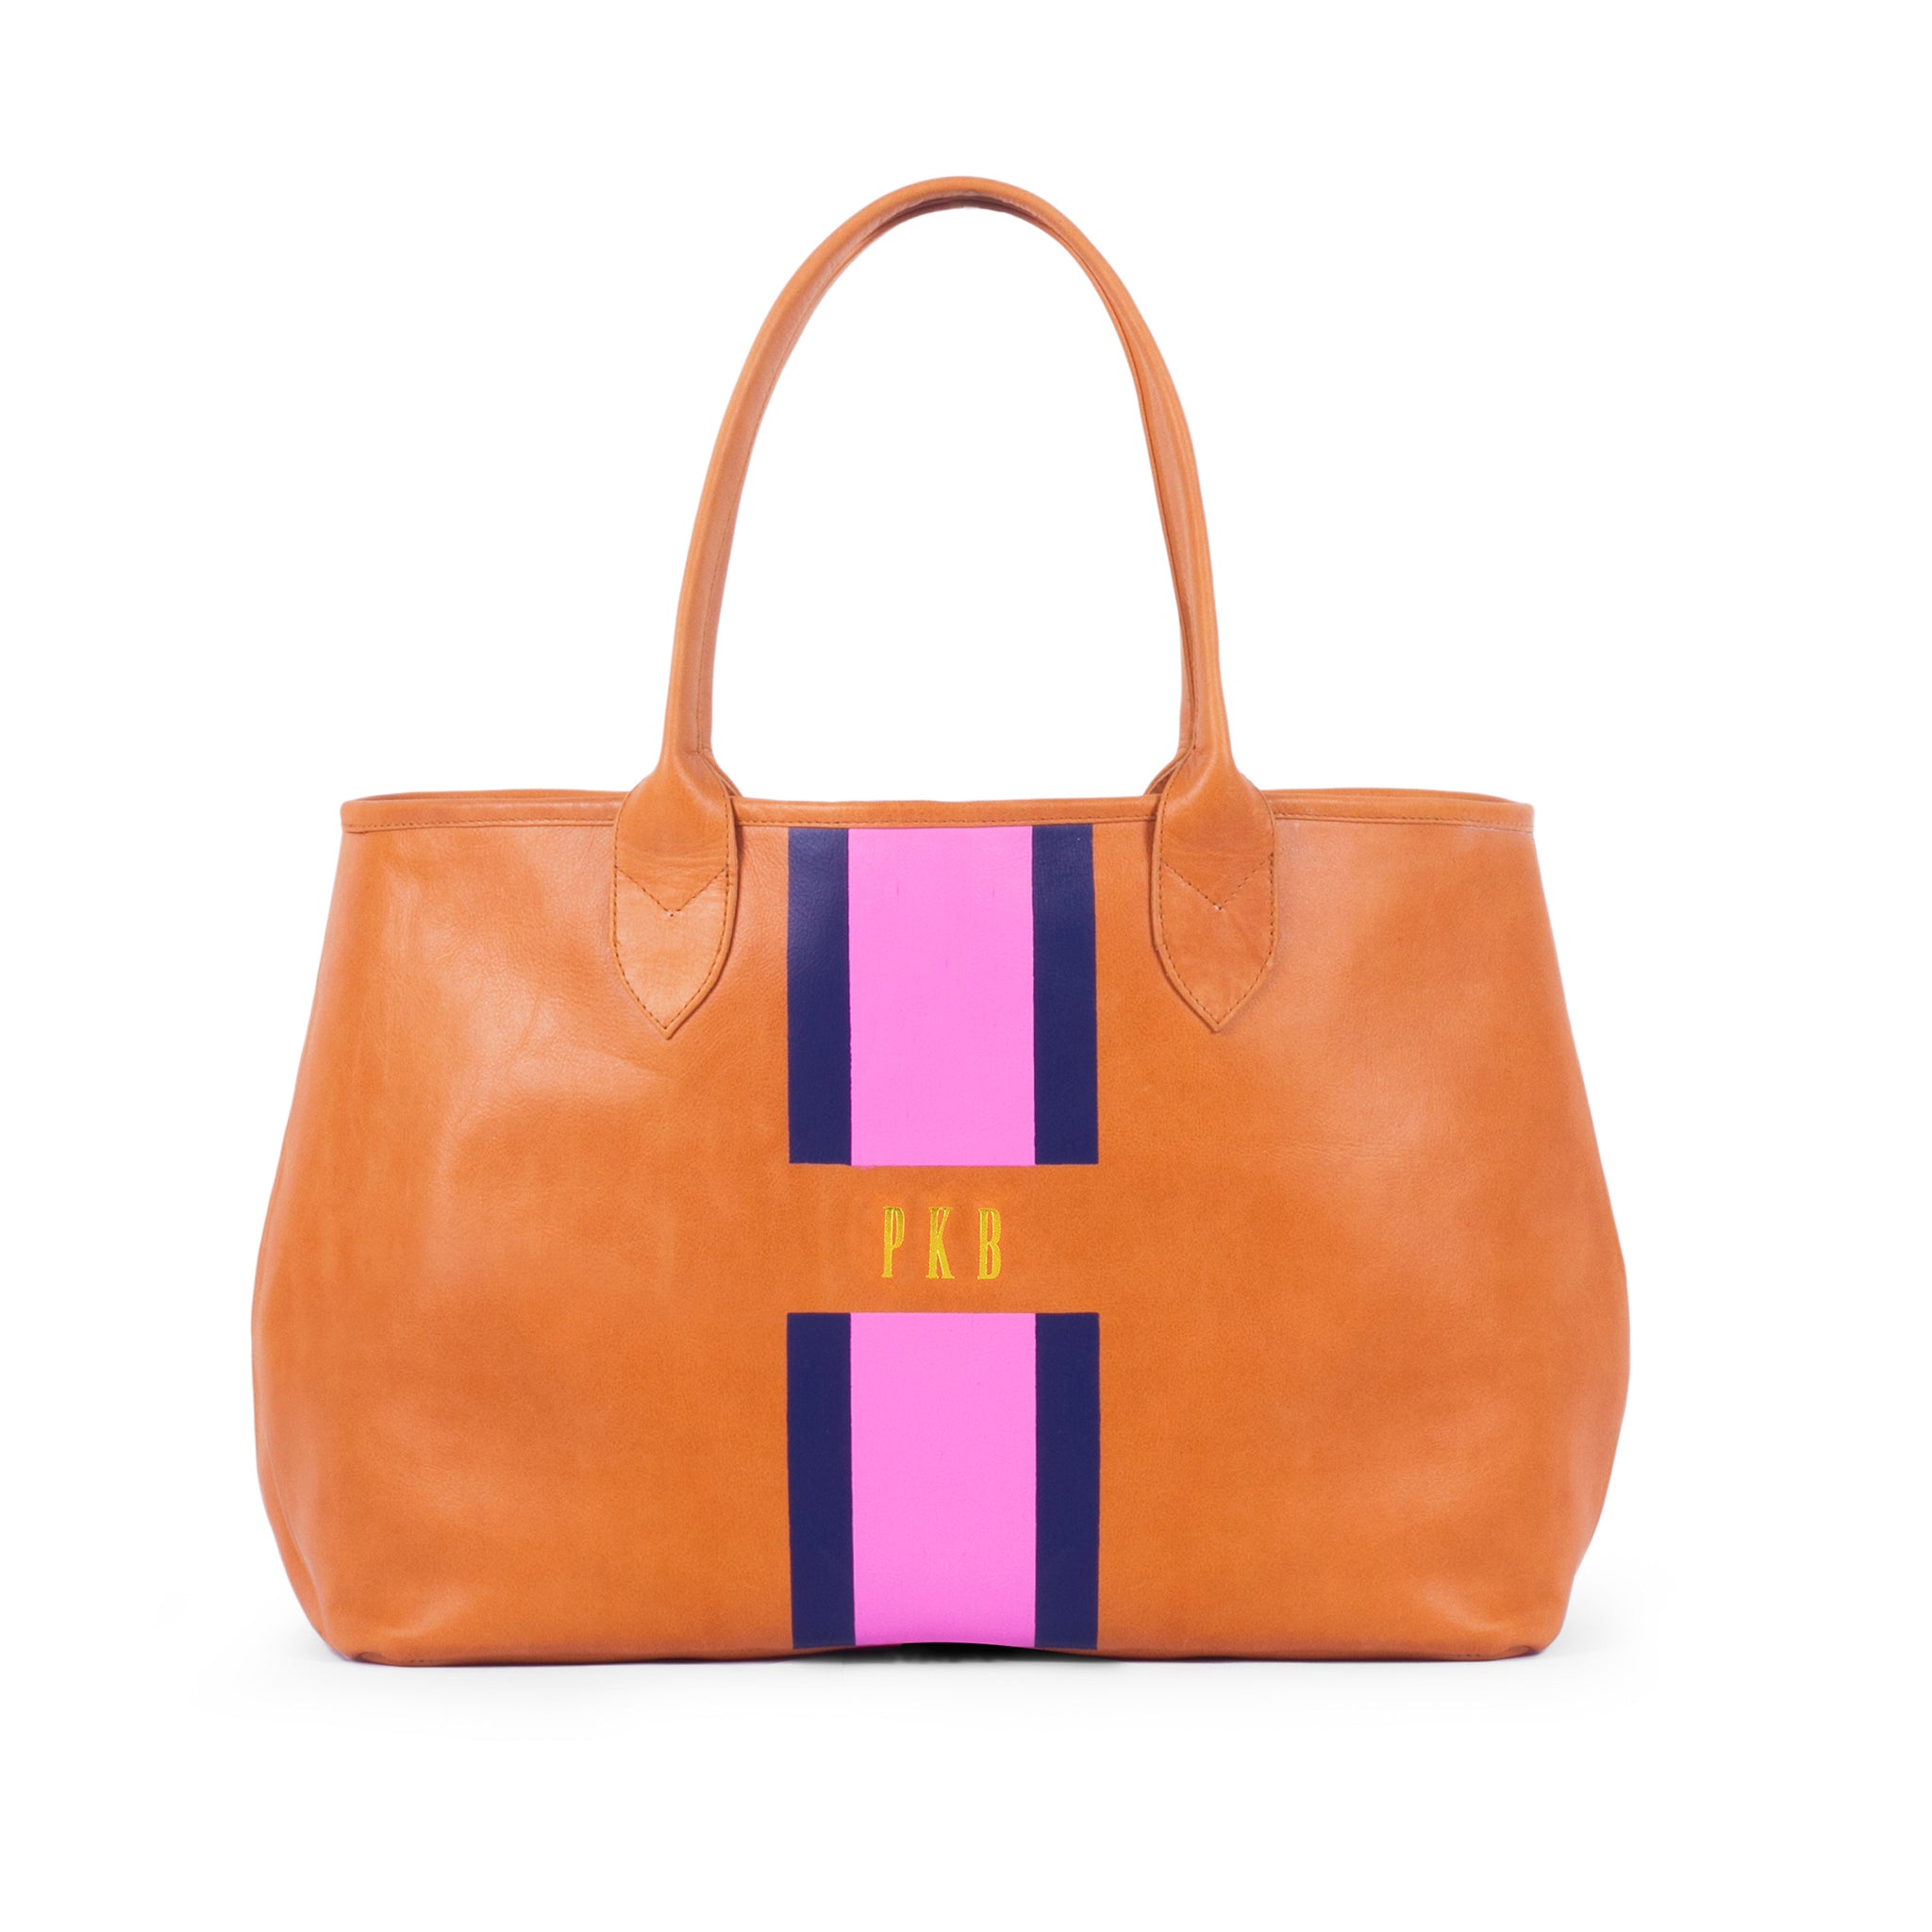 Gifts - Monogram - Handbags